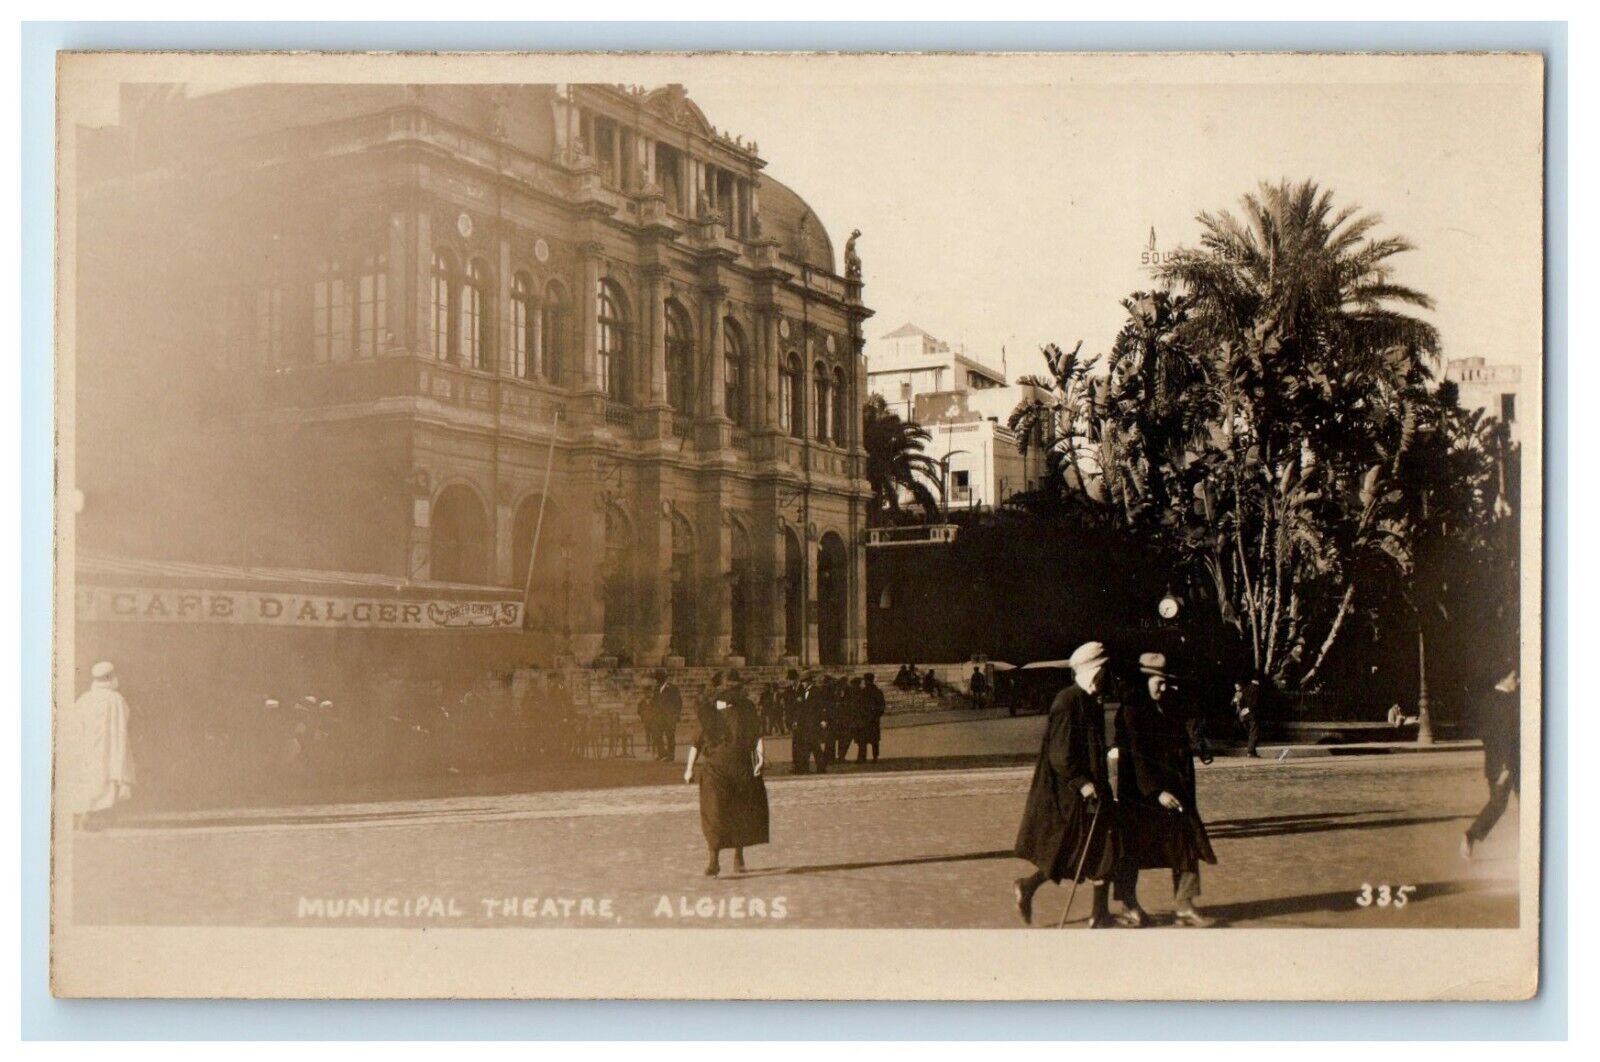 c1920's Municipal Theater Algiers Algeria RPPC Photo Candid Postcard